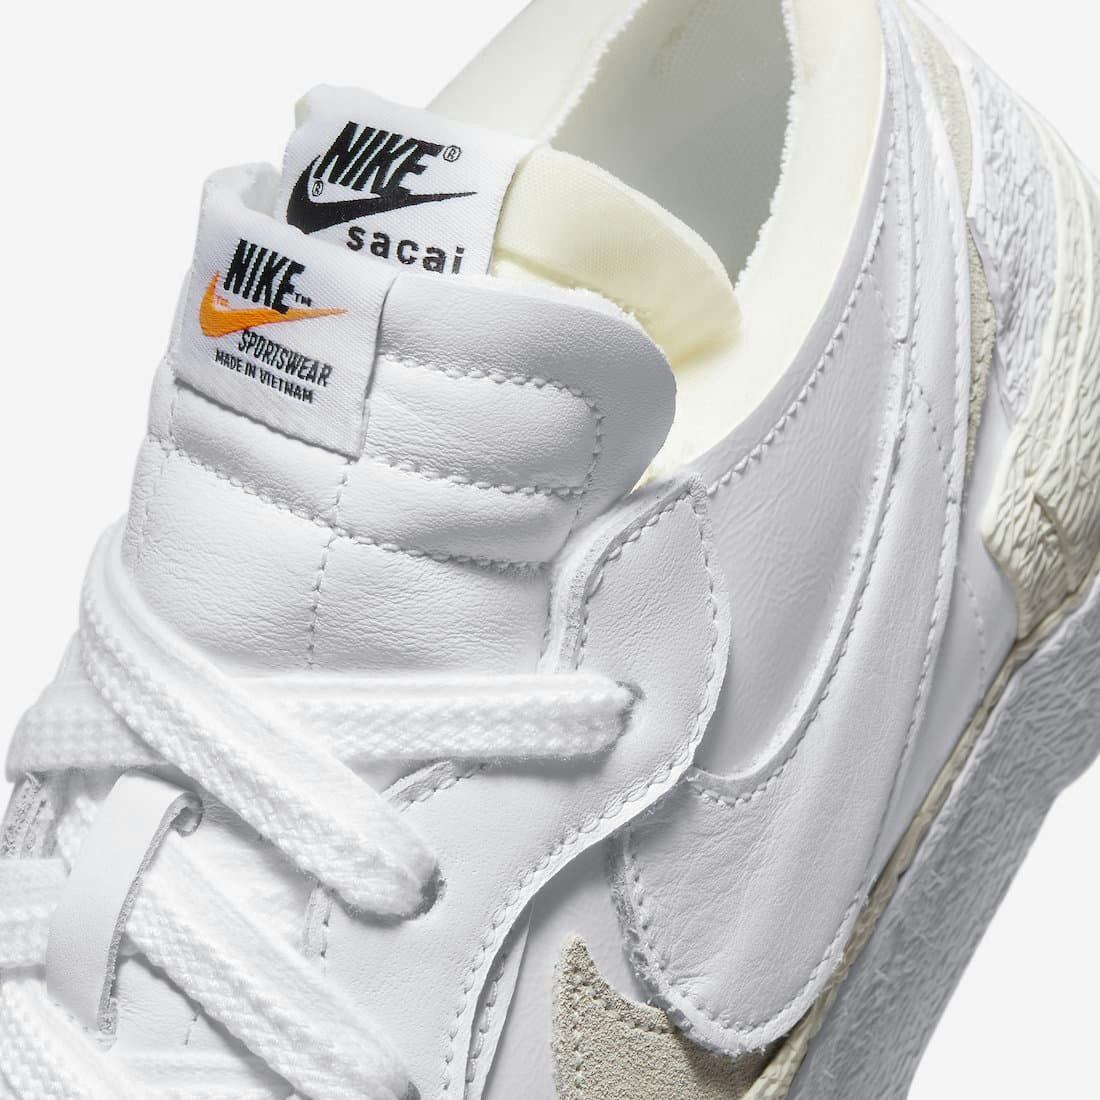 Sacai x Nike Blazer Low "White Patent"